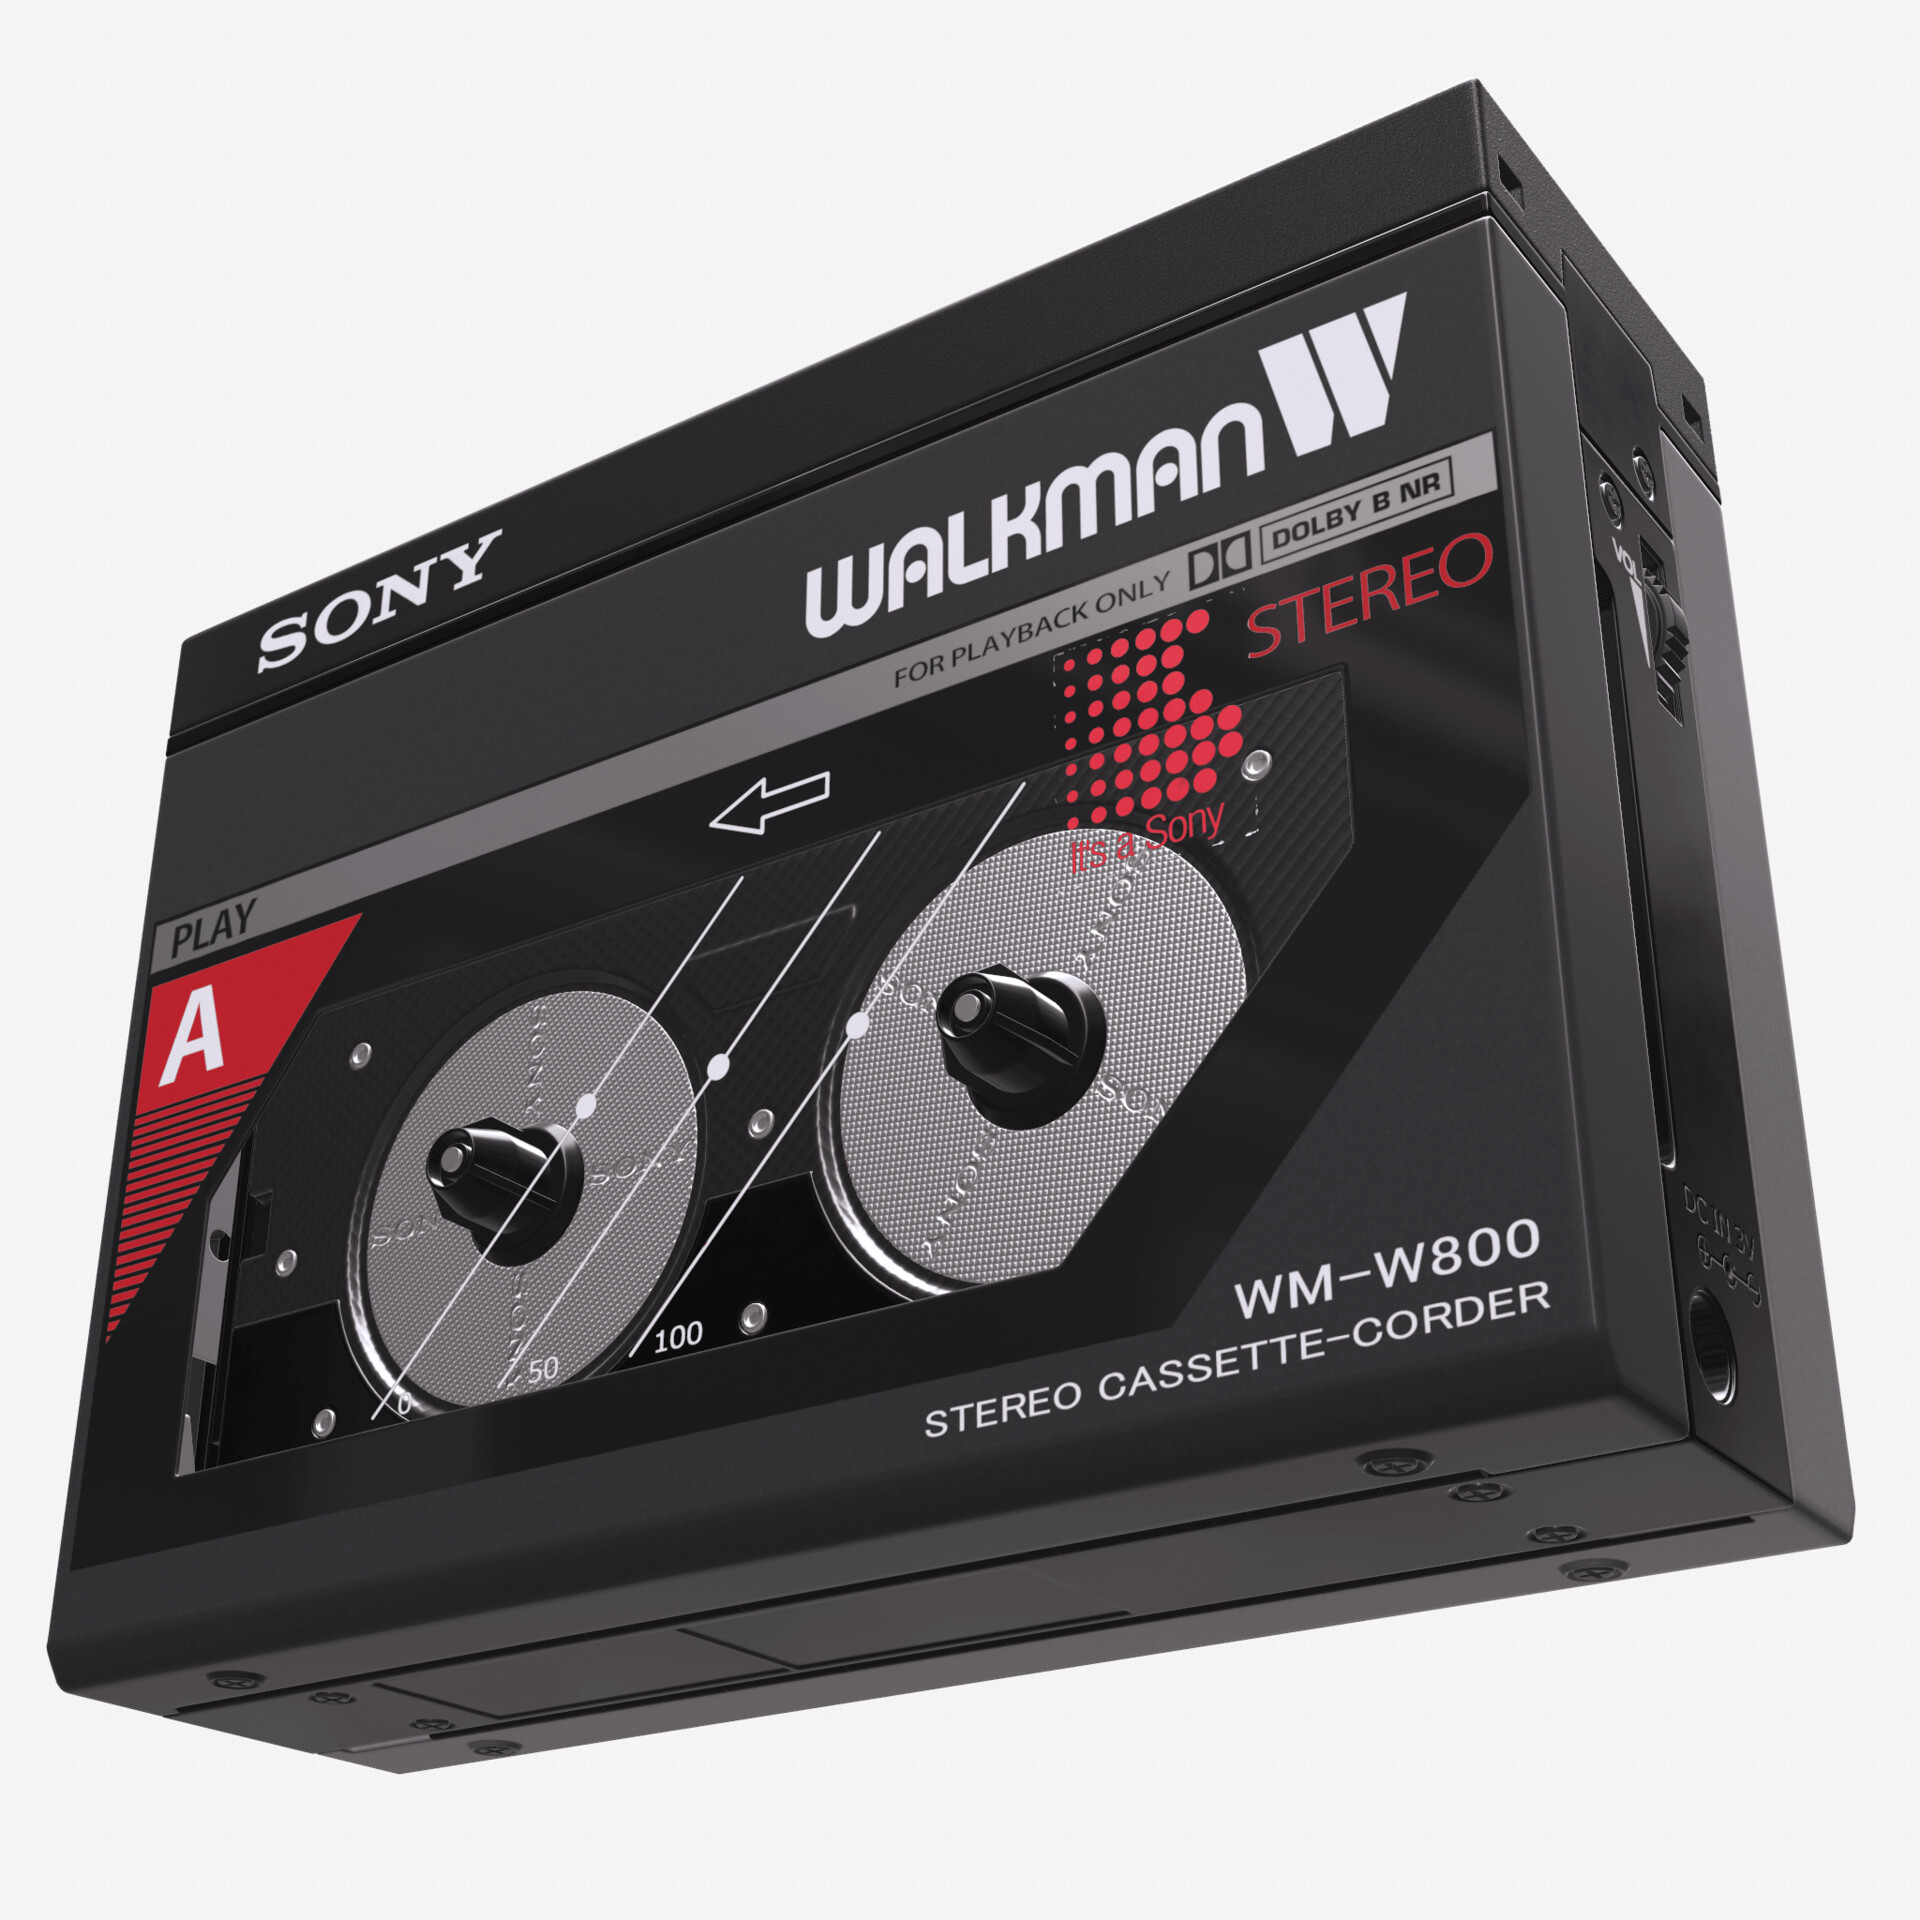 SONY WALKMAN WM-W800 NEW OLD STOCK DOUBLE CASSETTE PLAYER/RECORDER